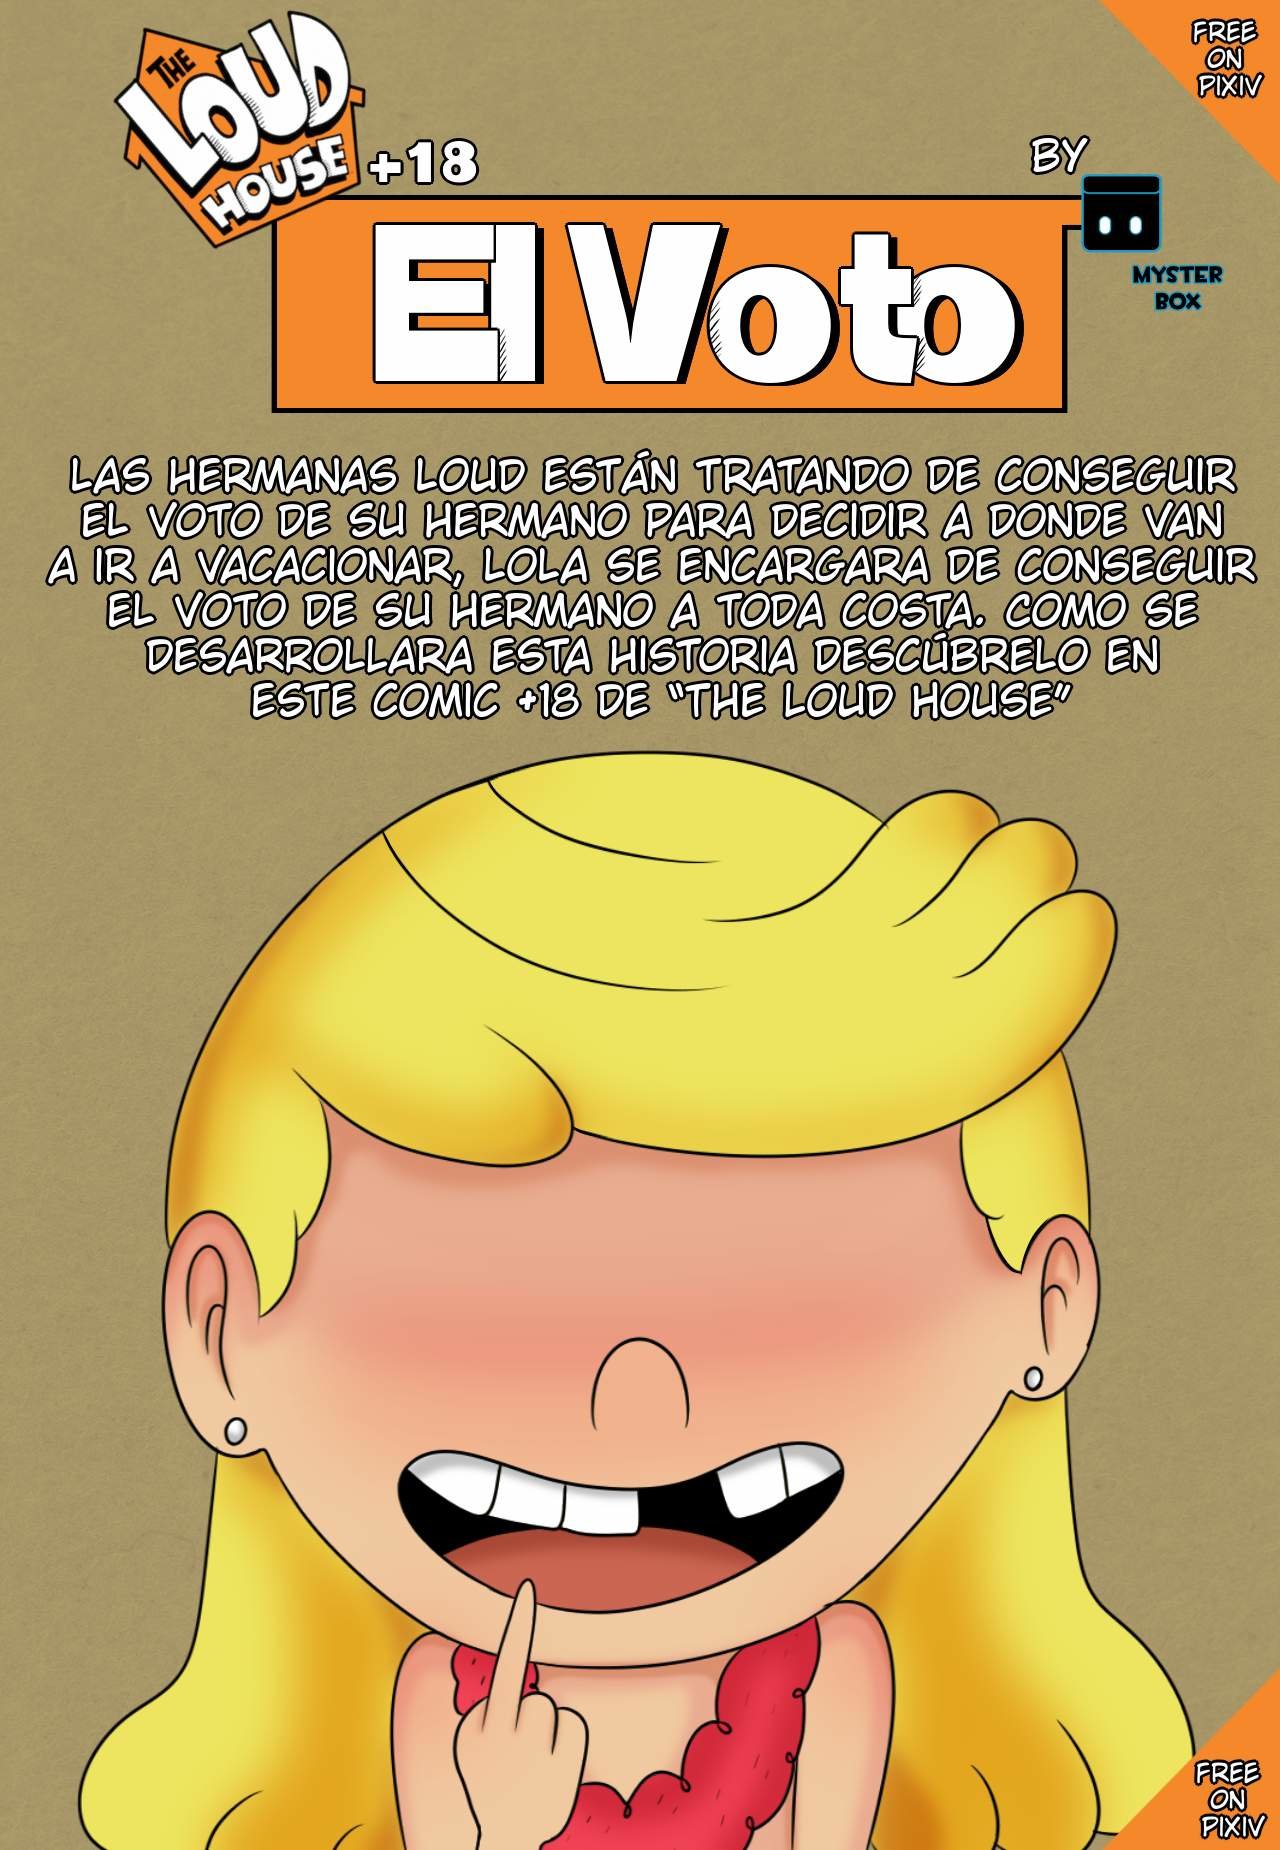 (Myster box) El voto - 0